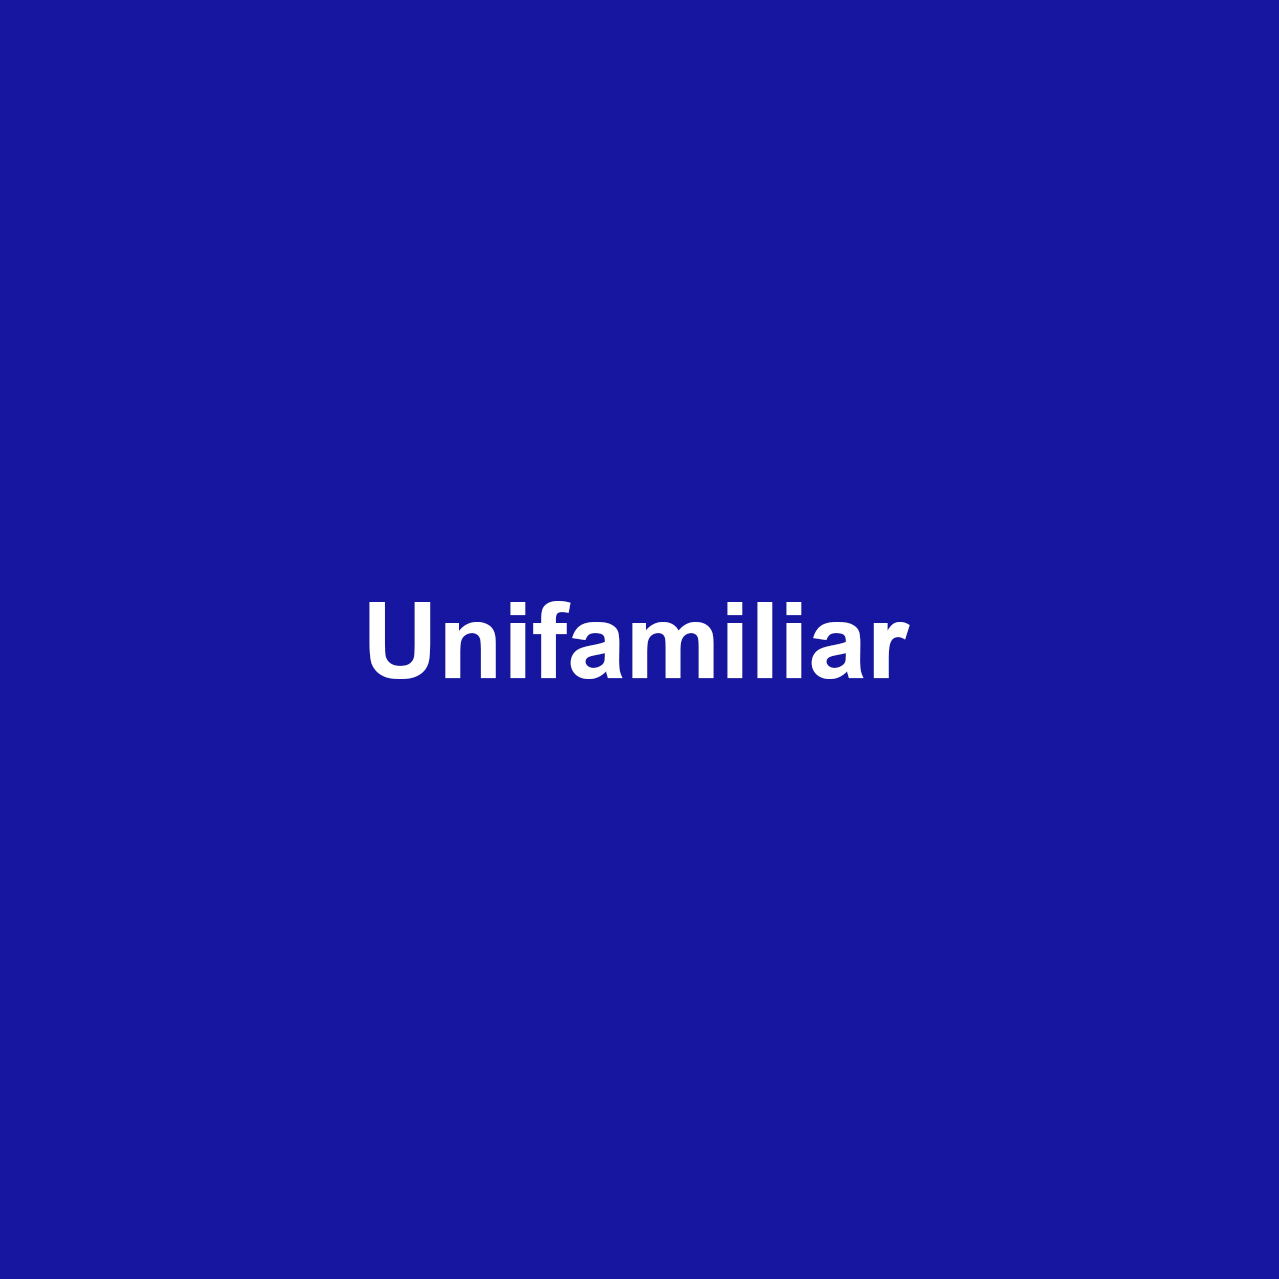 unifamiliar